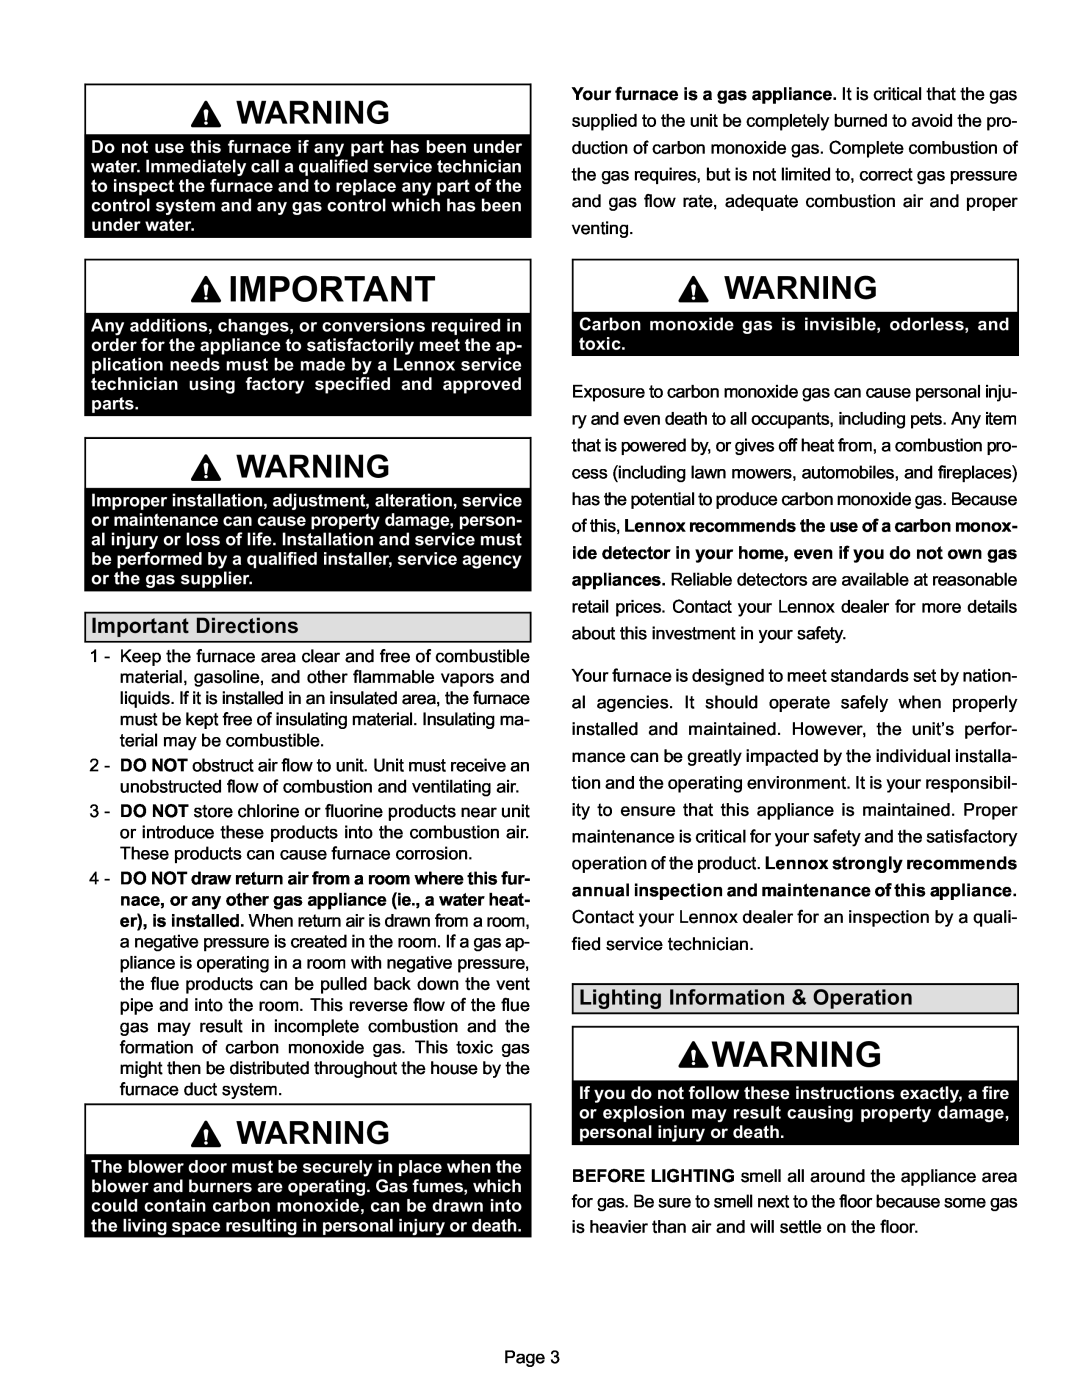 Lennox International Inc G60UH(X) manual Important Directions, Lighting Information & Operation 